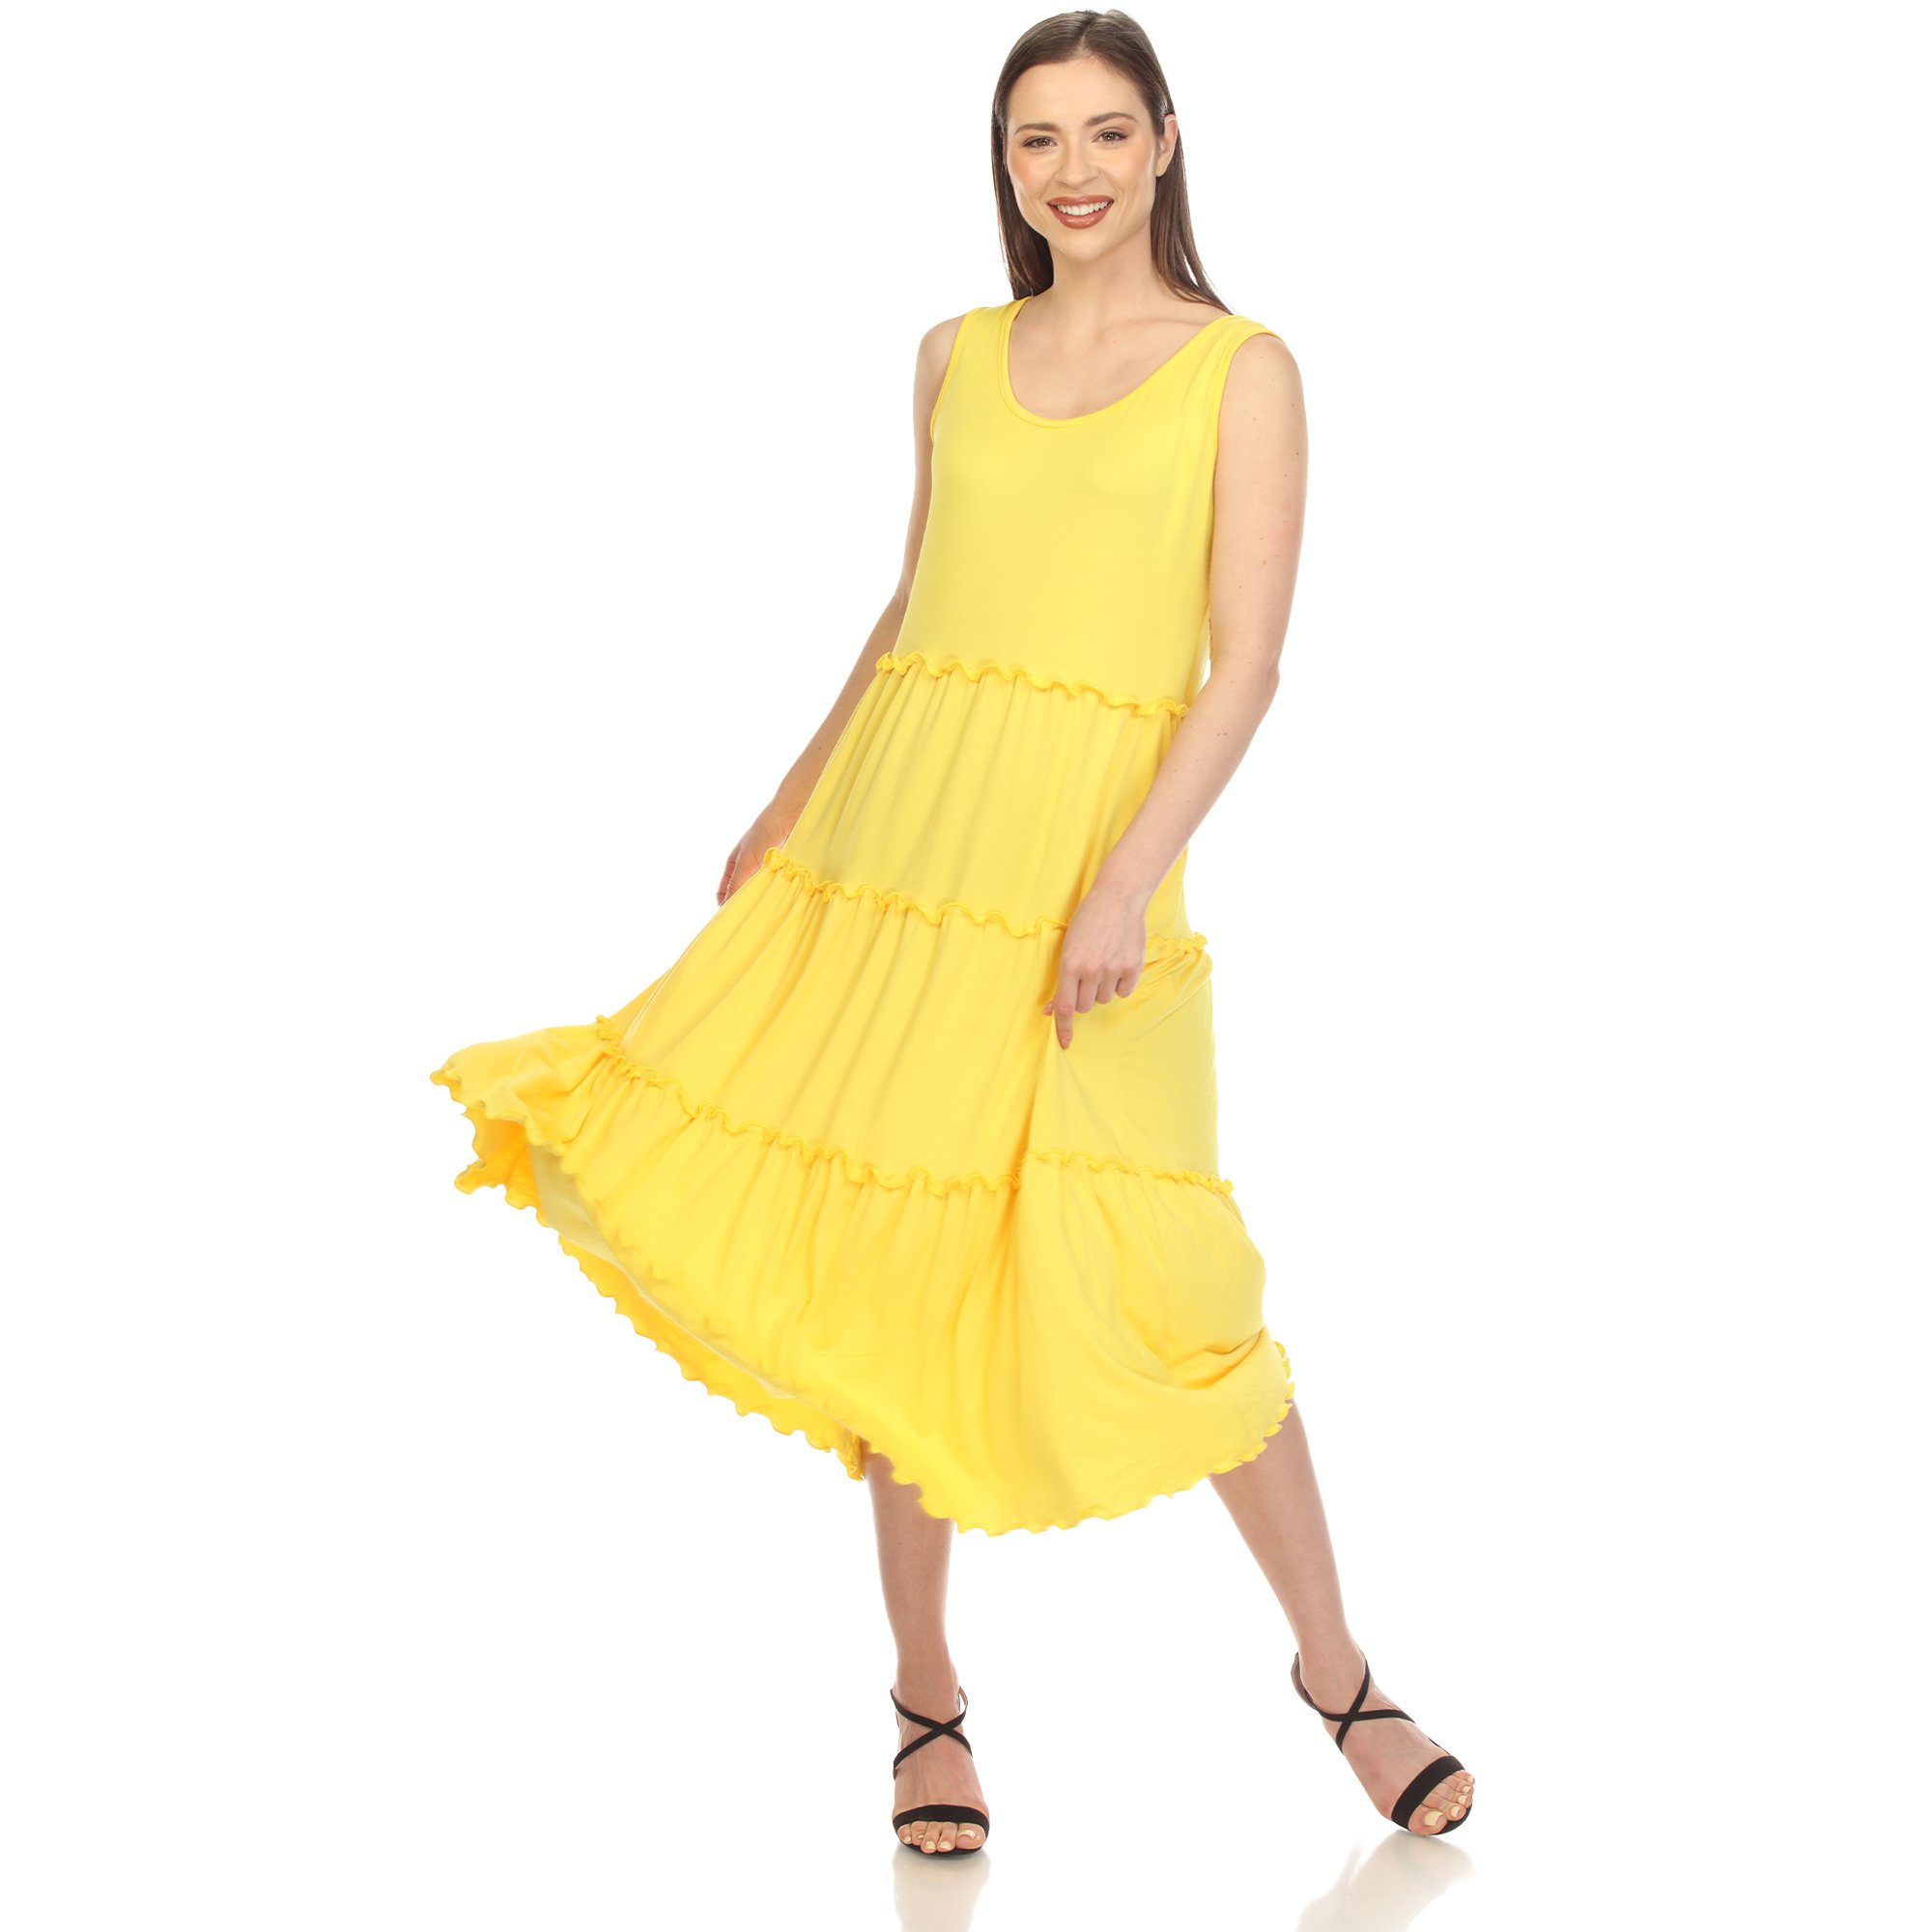 White Mark Women's Scoop Neck Tiered Midi Dress - Canary Yellow, 1X